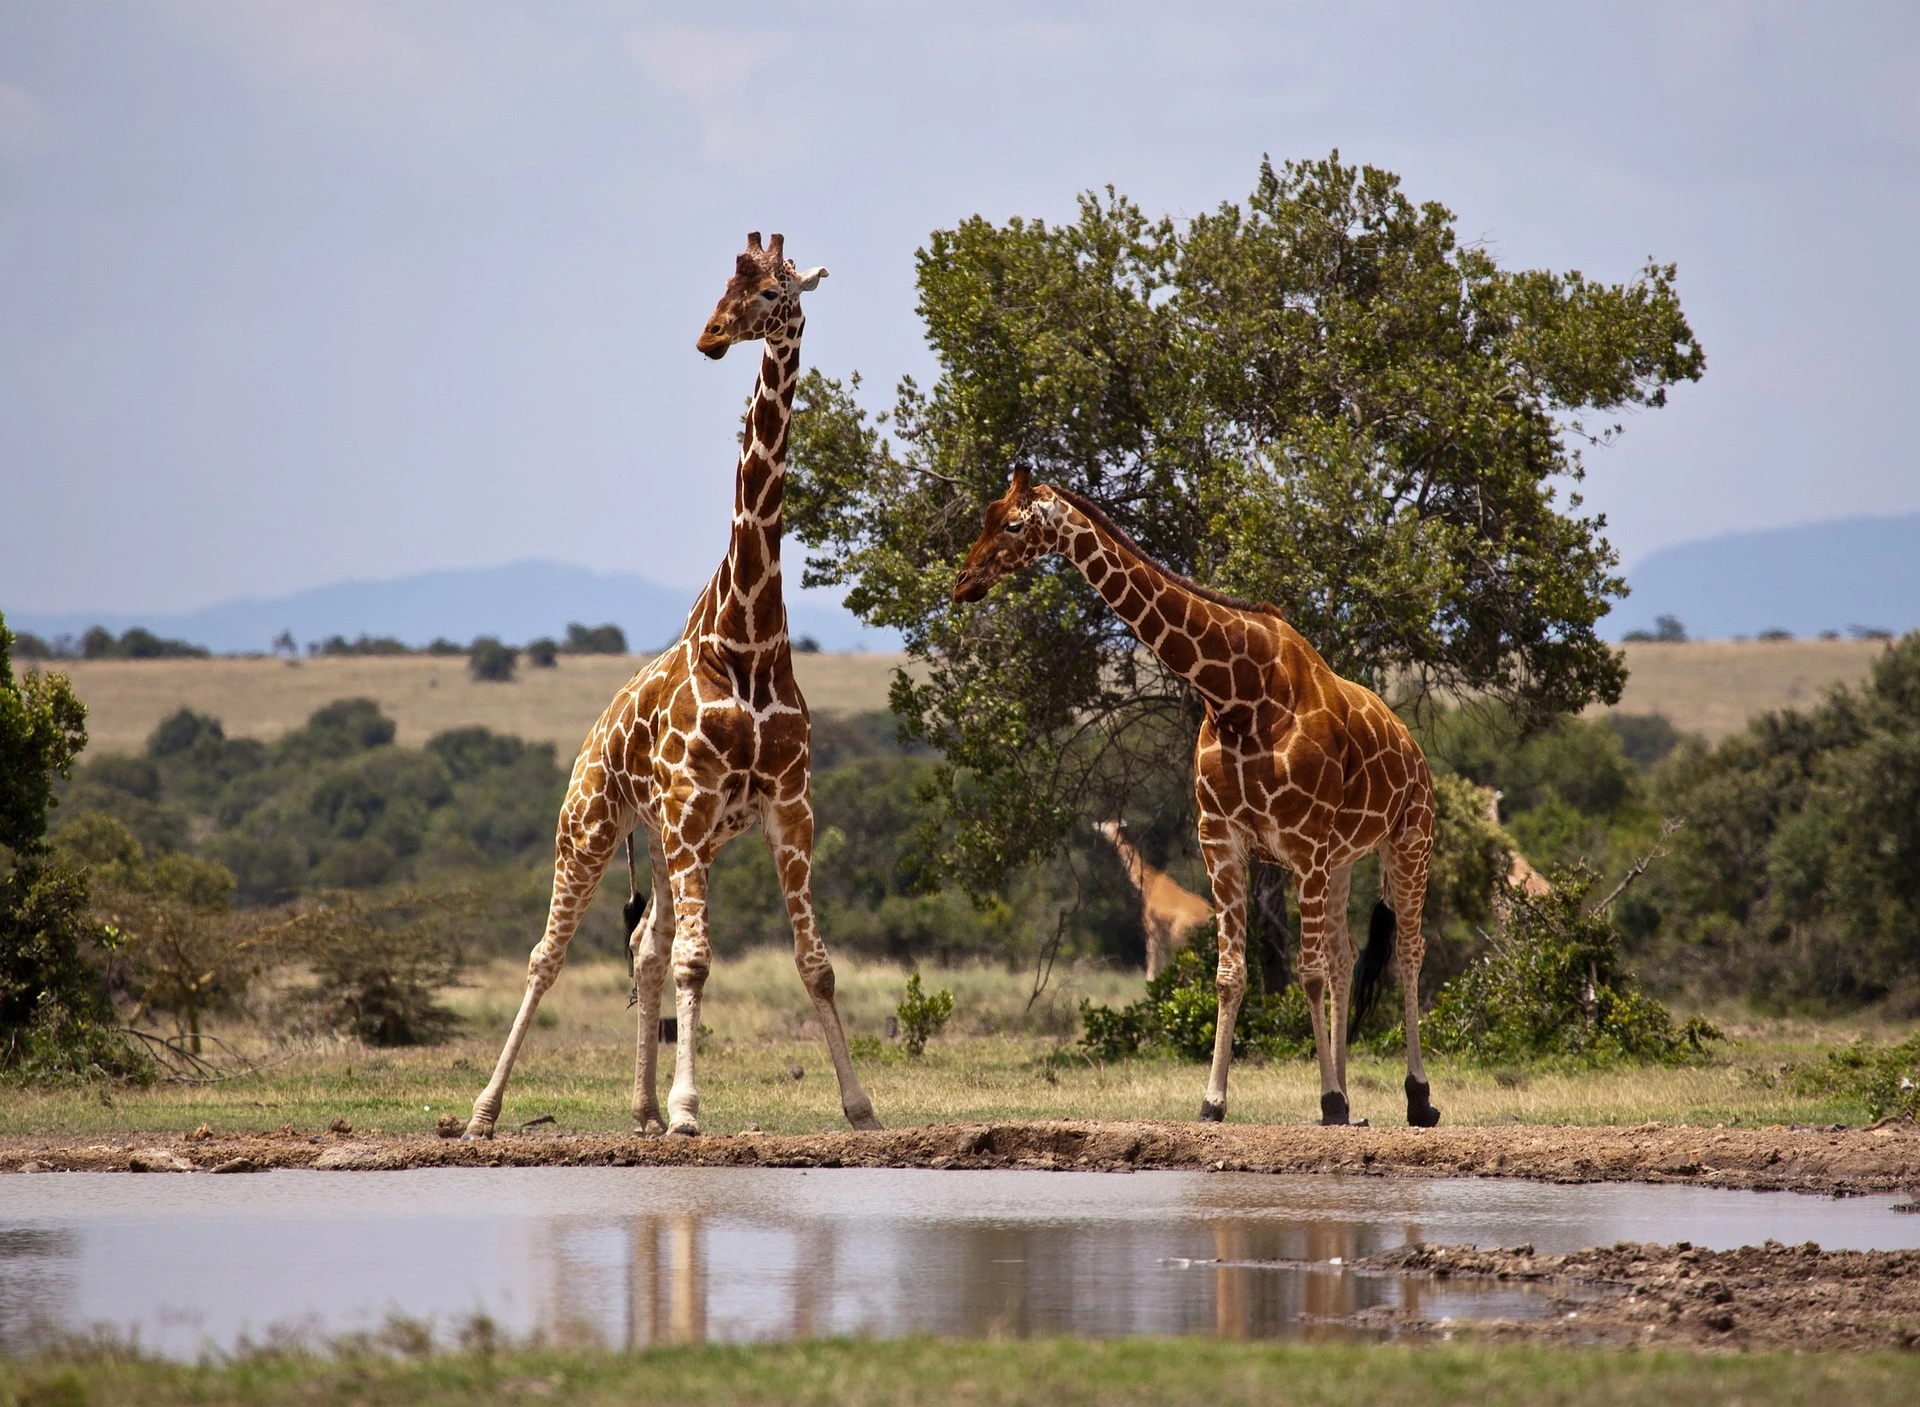 Kenya Safari in October - Giraffes in Tsavo National Park Kenya Safari in October - Giraffes in Tsavo National Park